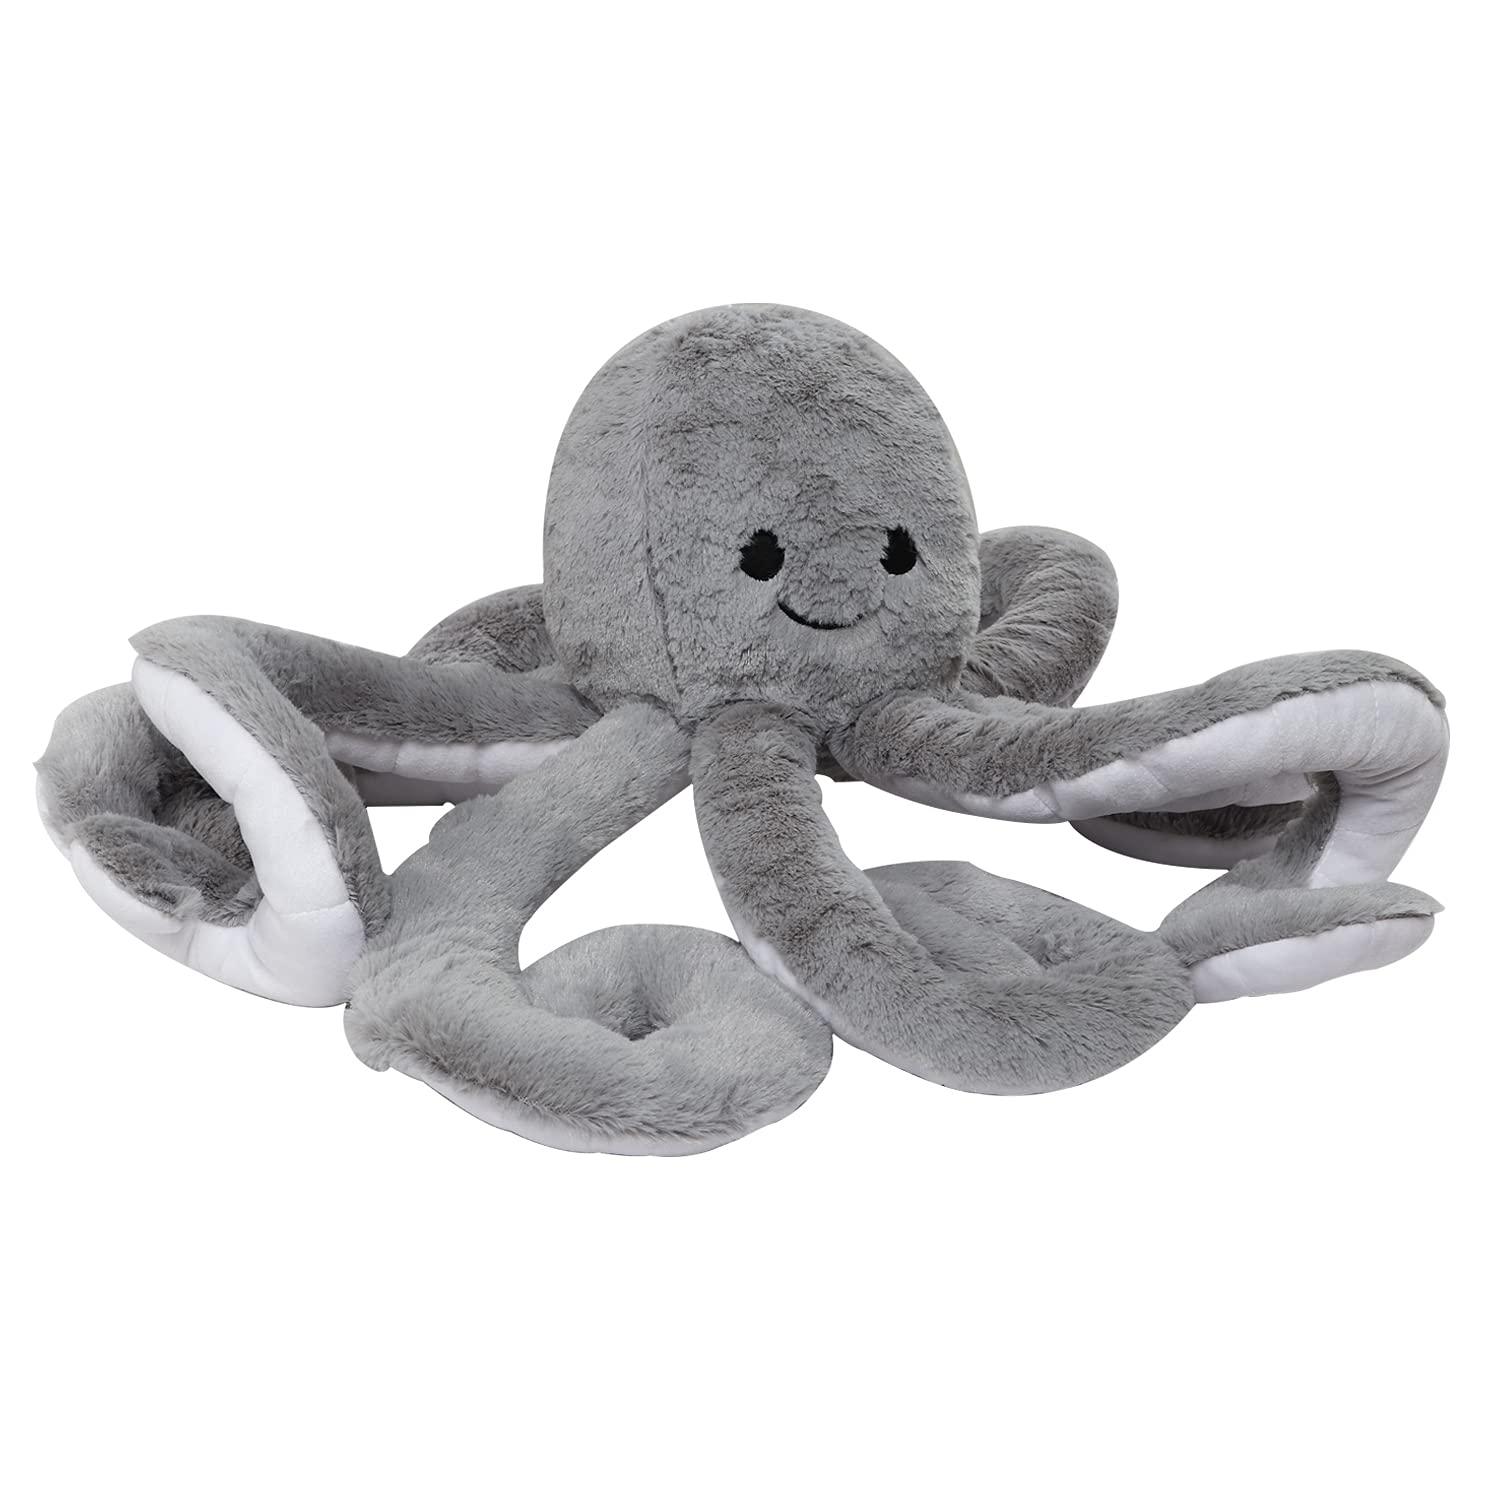 Webby Giant Realistic Stuffed Octopus Animals Soft Plush Toy, Grey